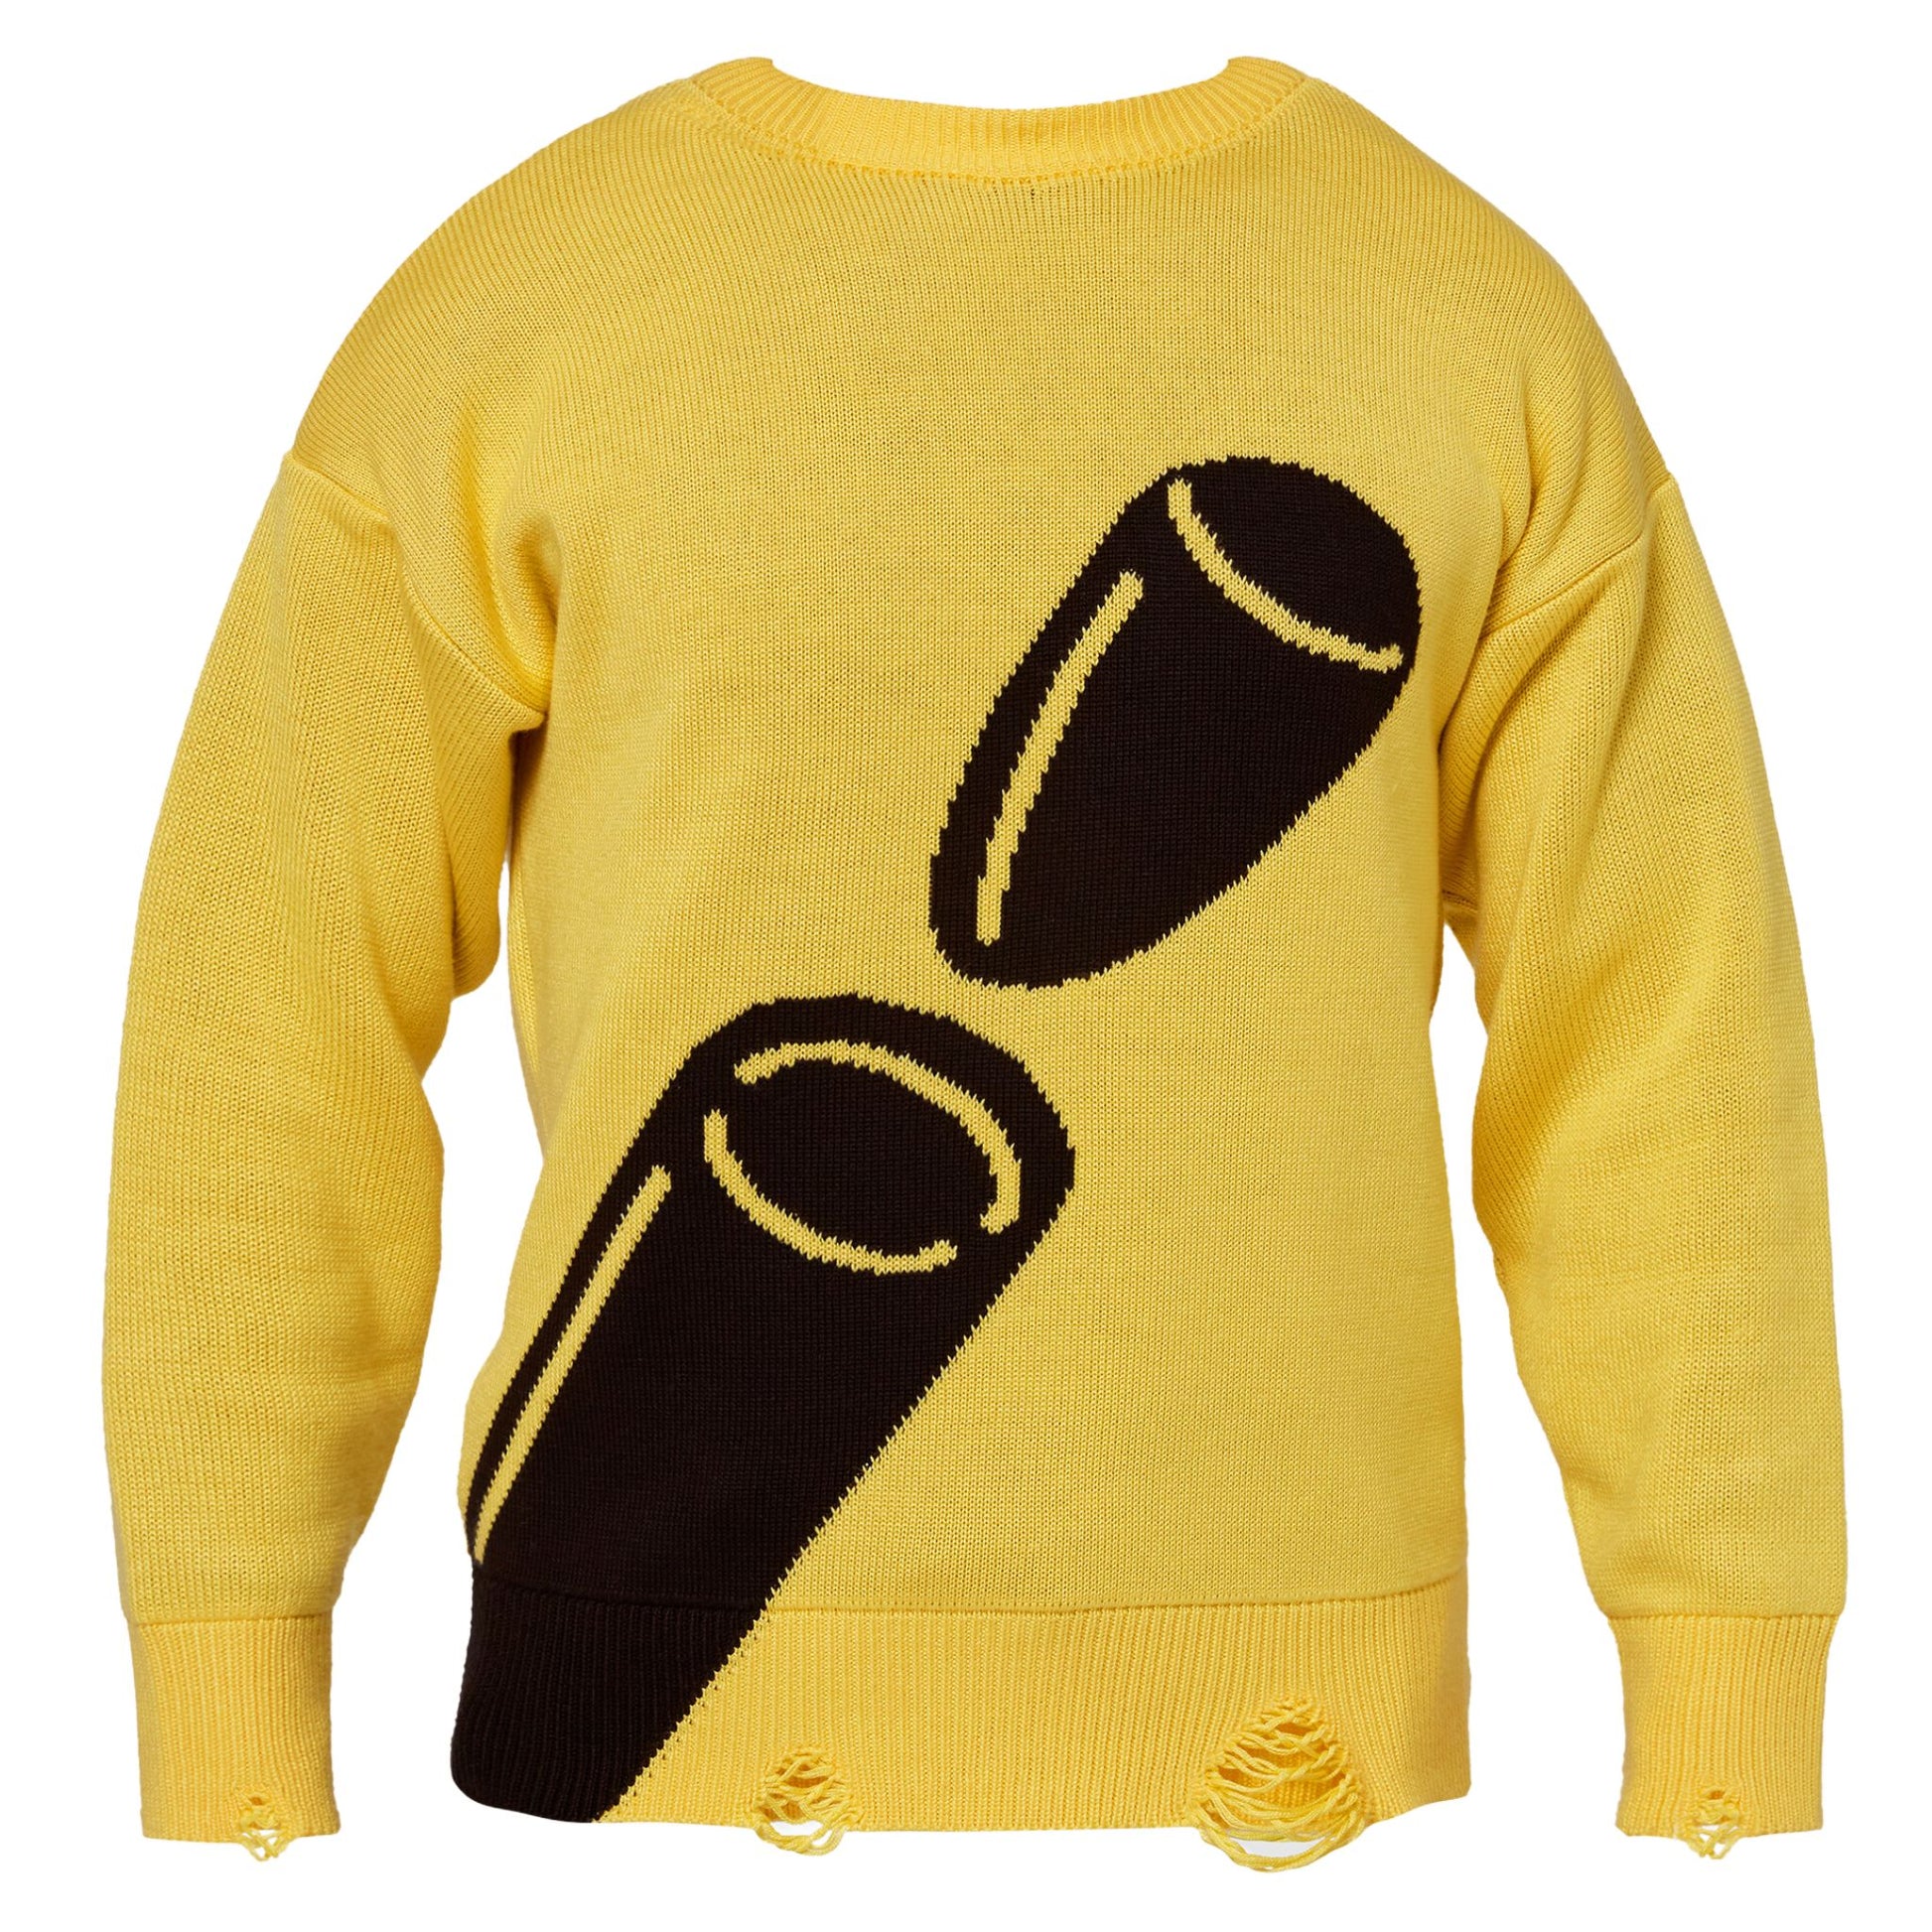 EGHO - Sweater Tricot Fukuda "Amarelo" - THE GAME